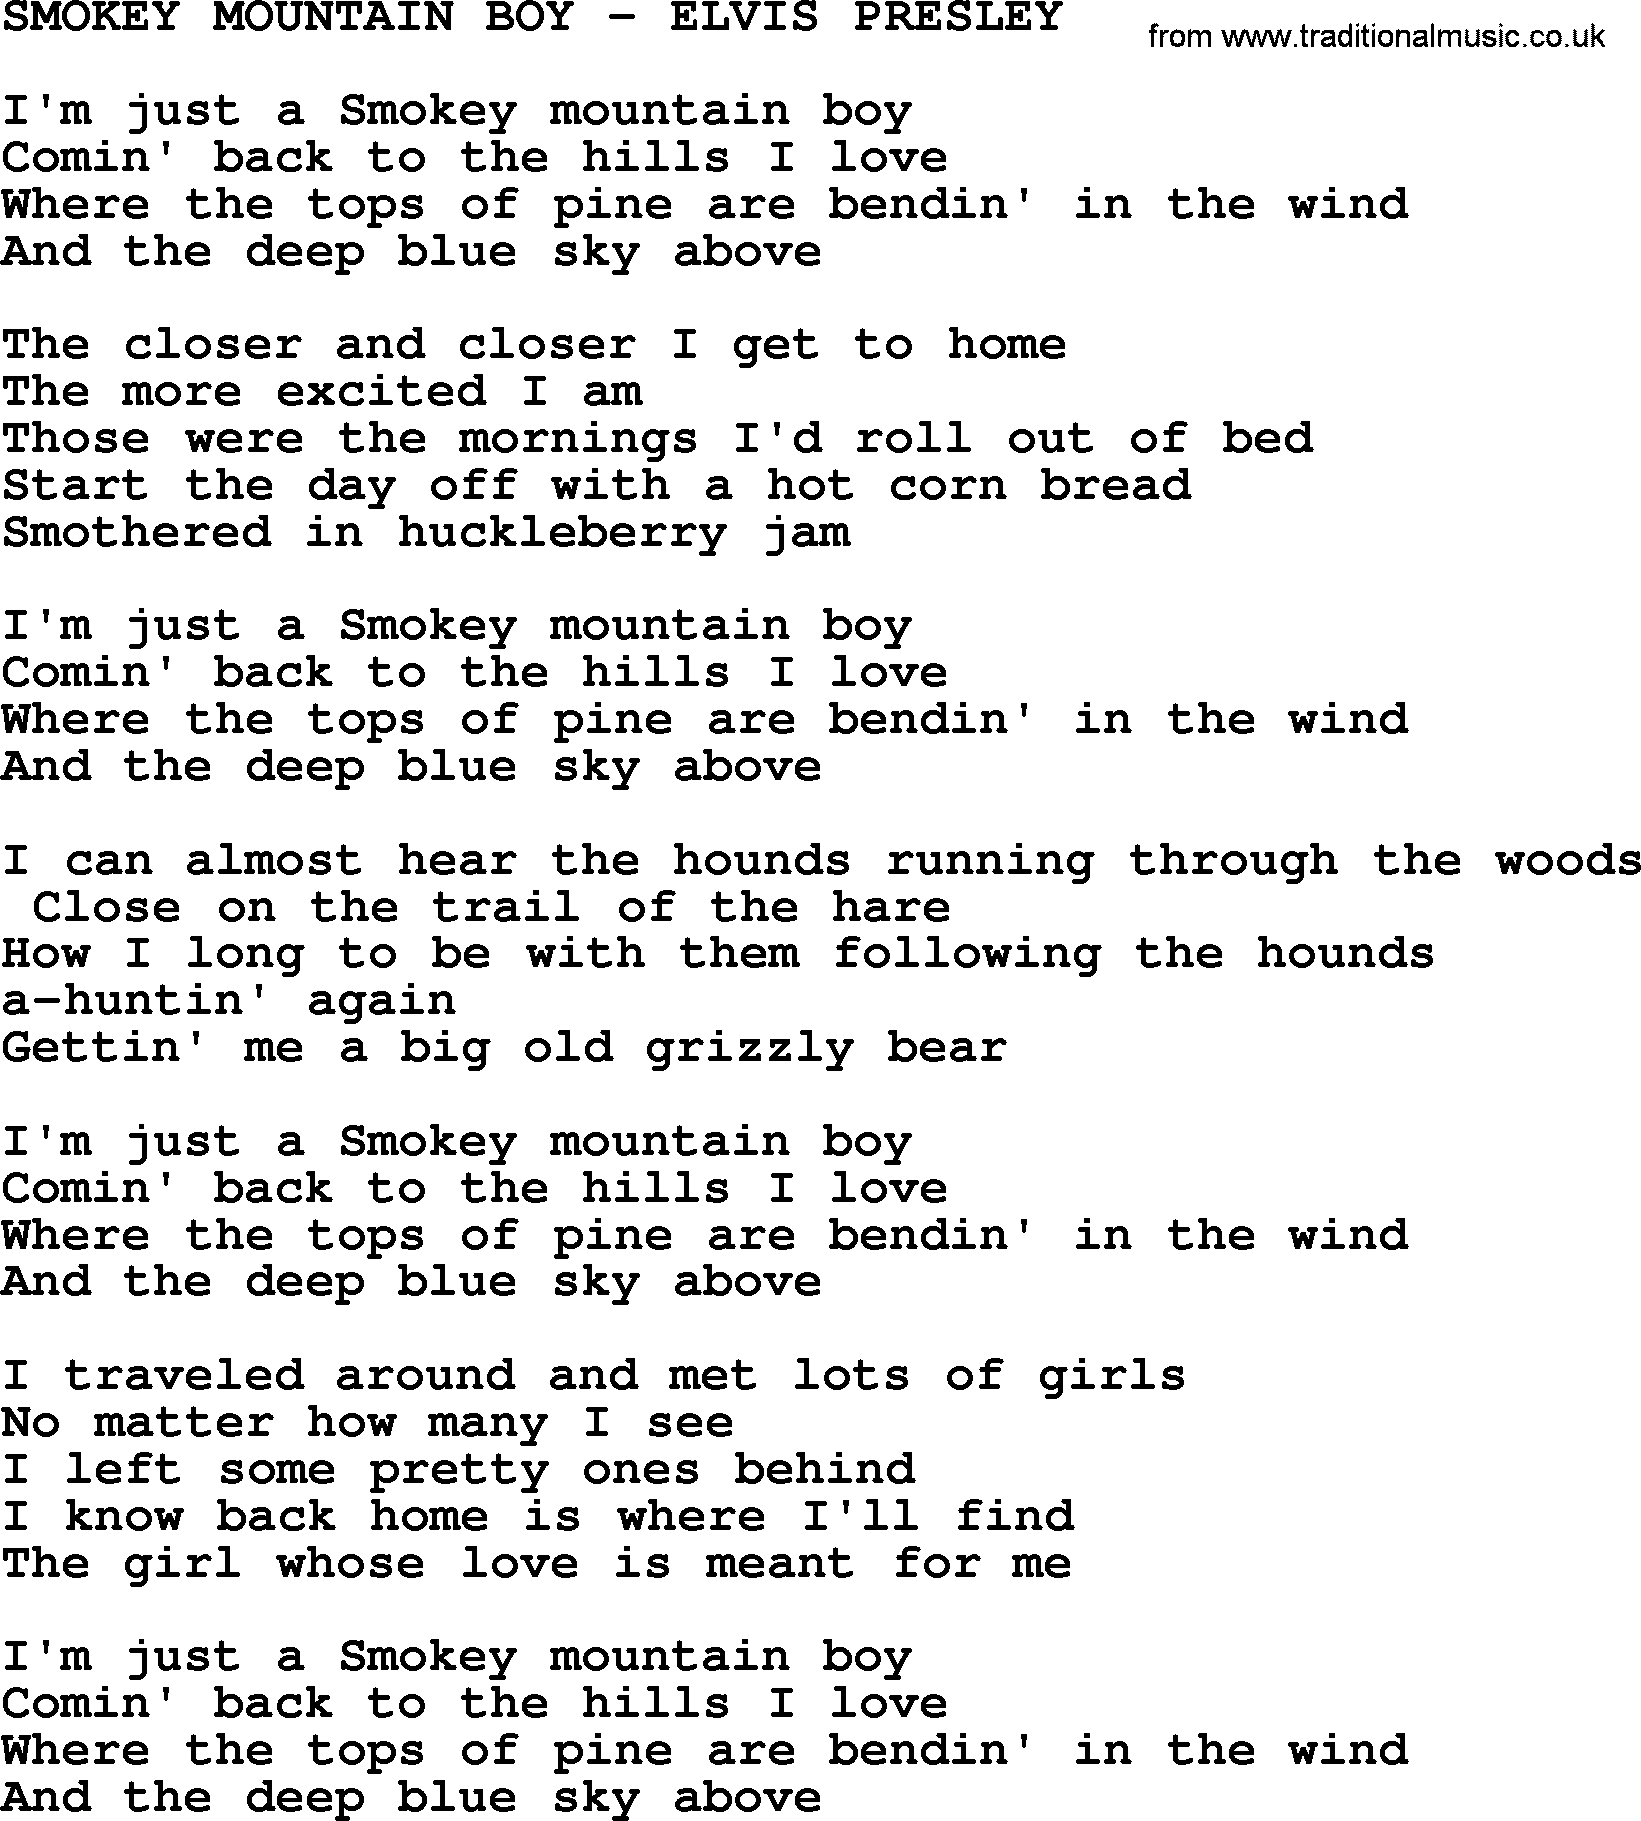 Elvis Presley song: Smokey Mountain Boy-Elvis Presley-.txt lyrics and chords